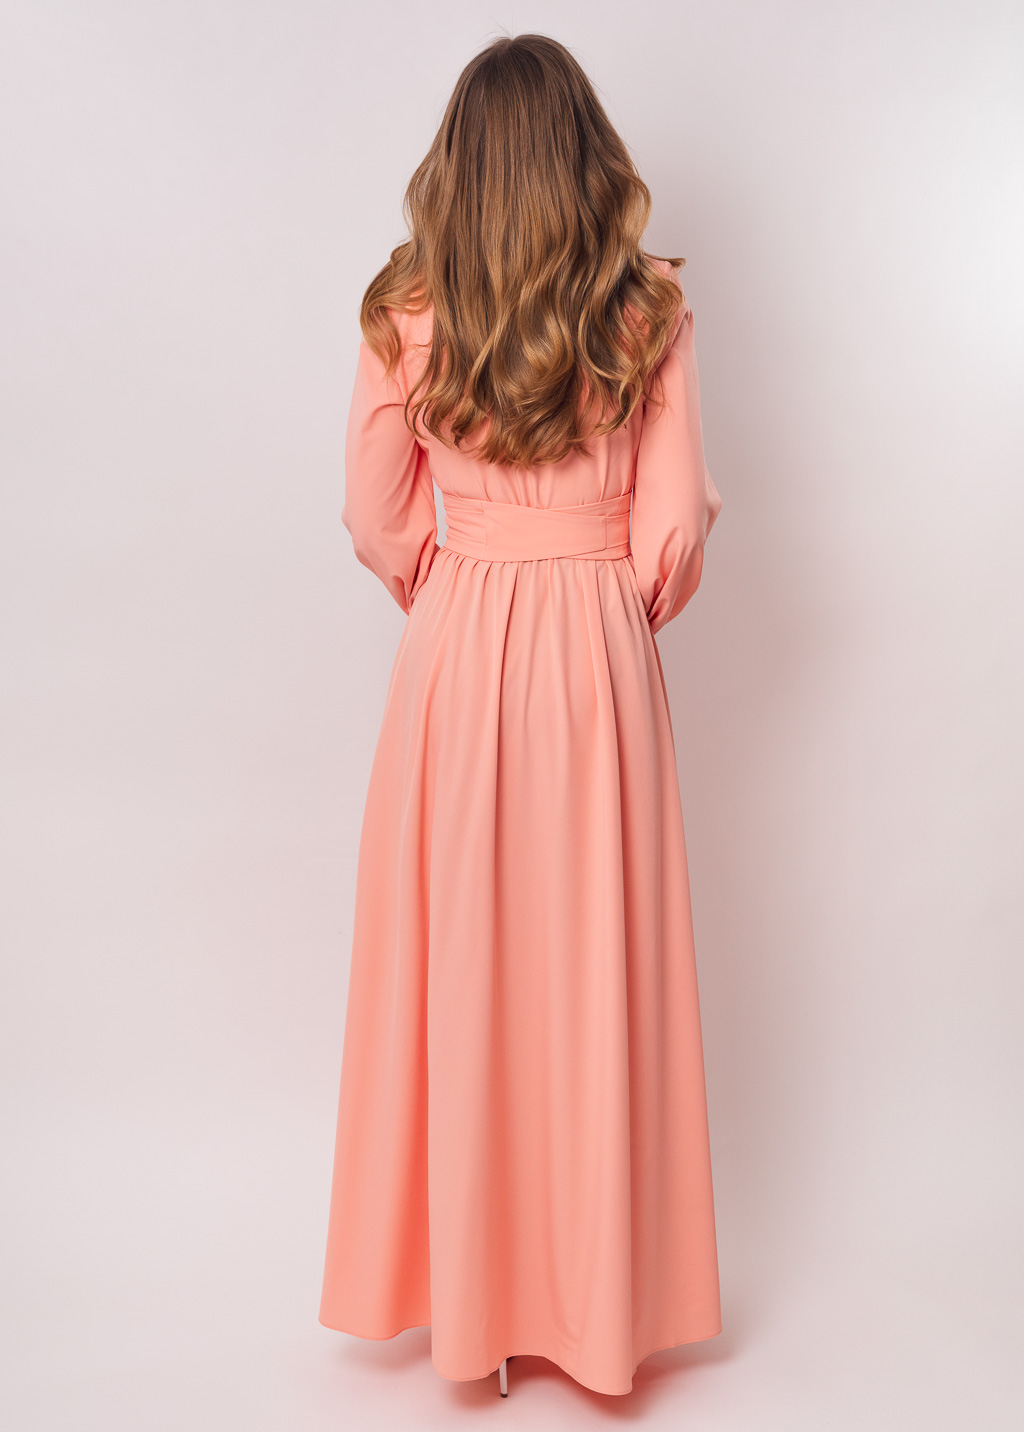 Blush pink slit dress with belt